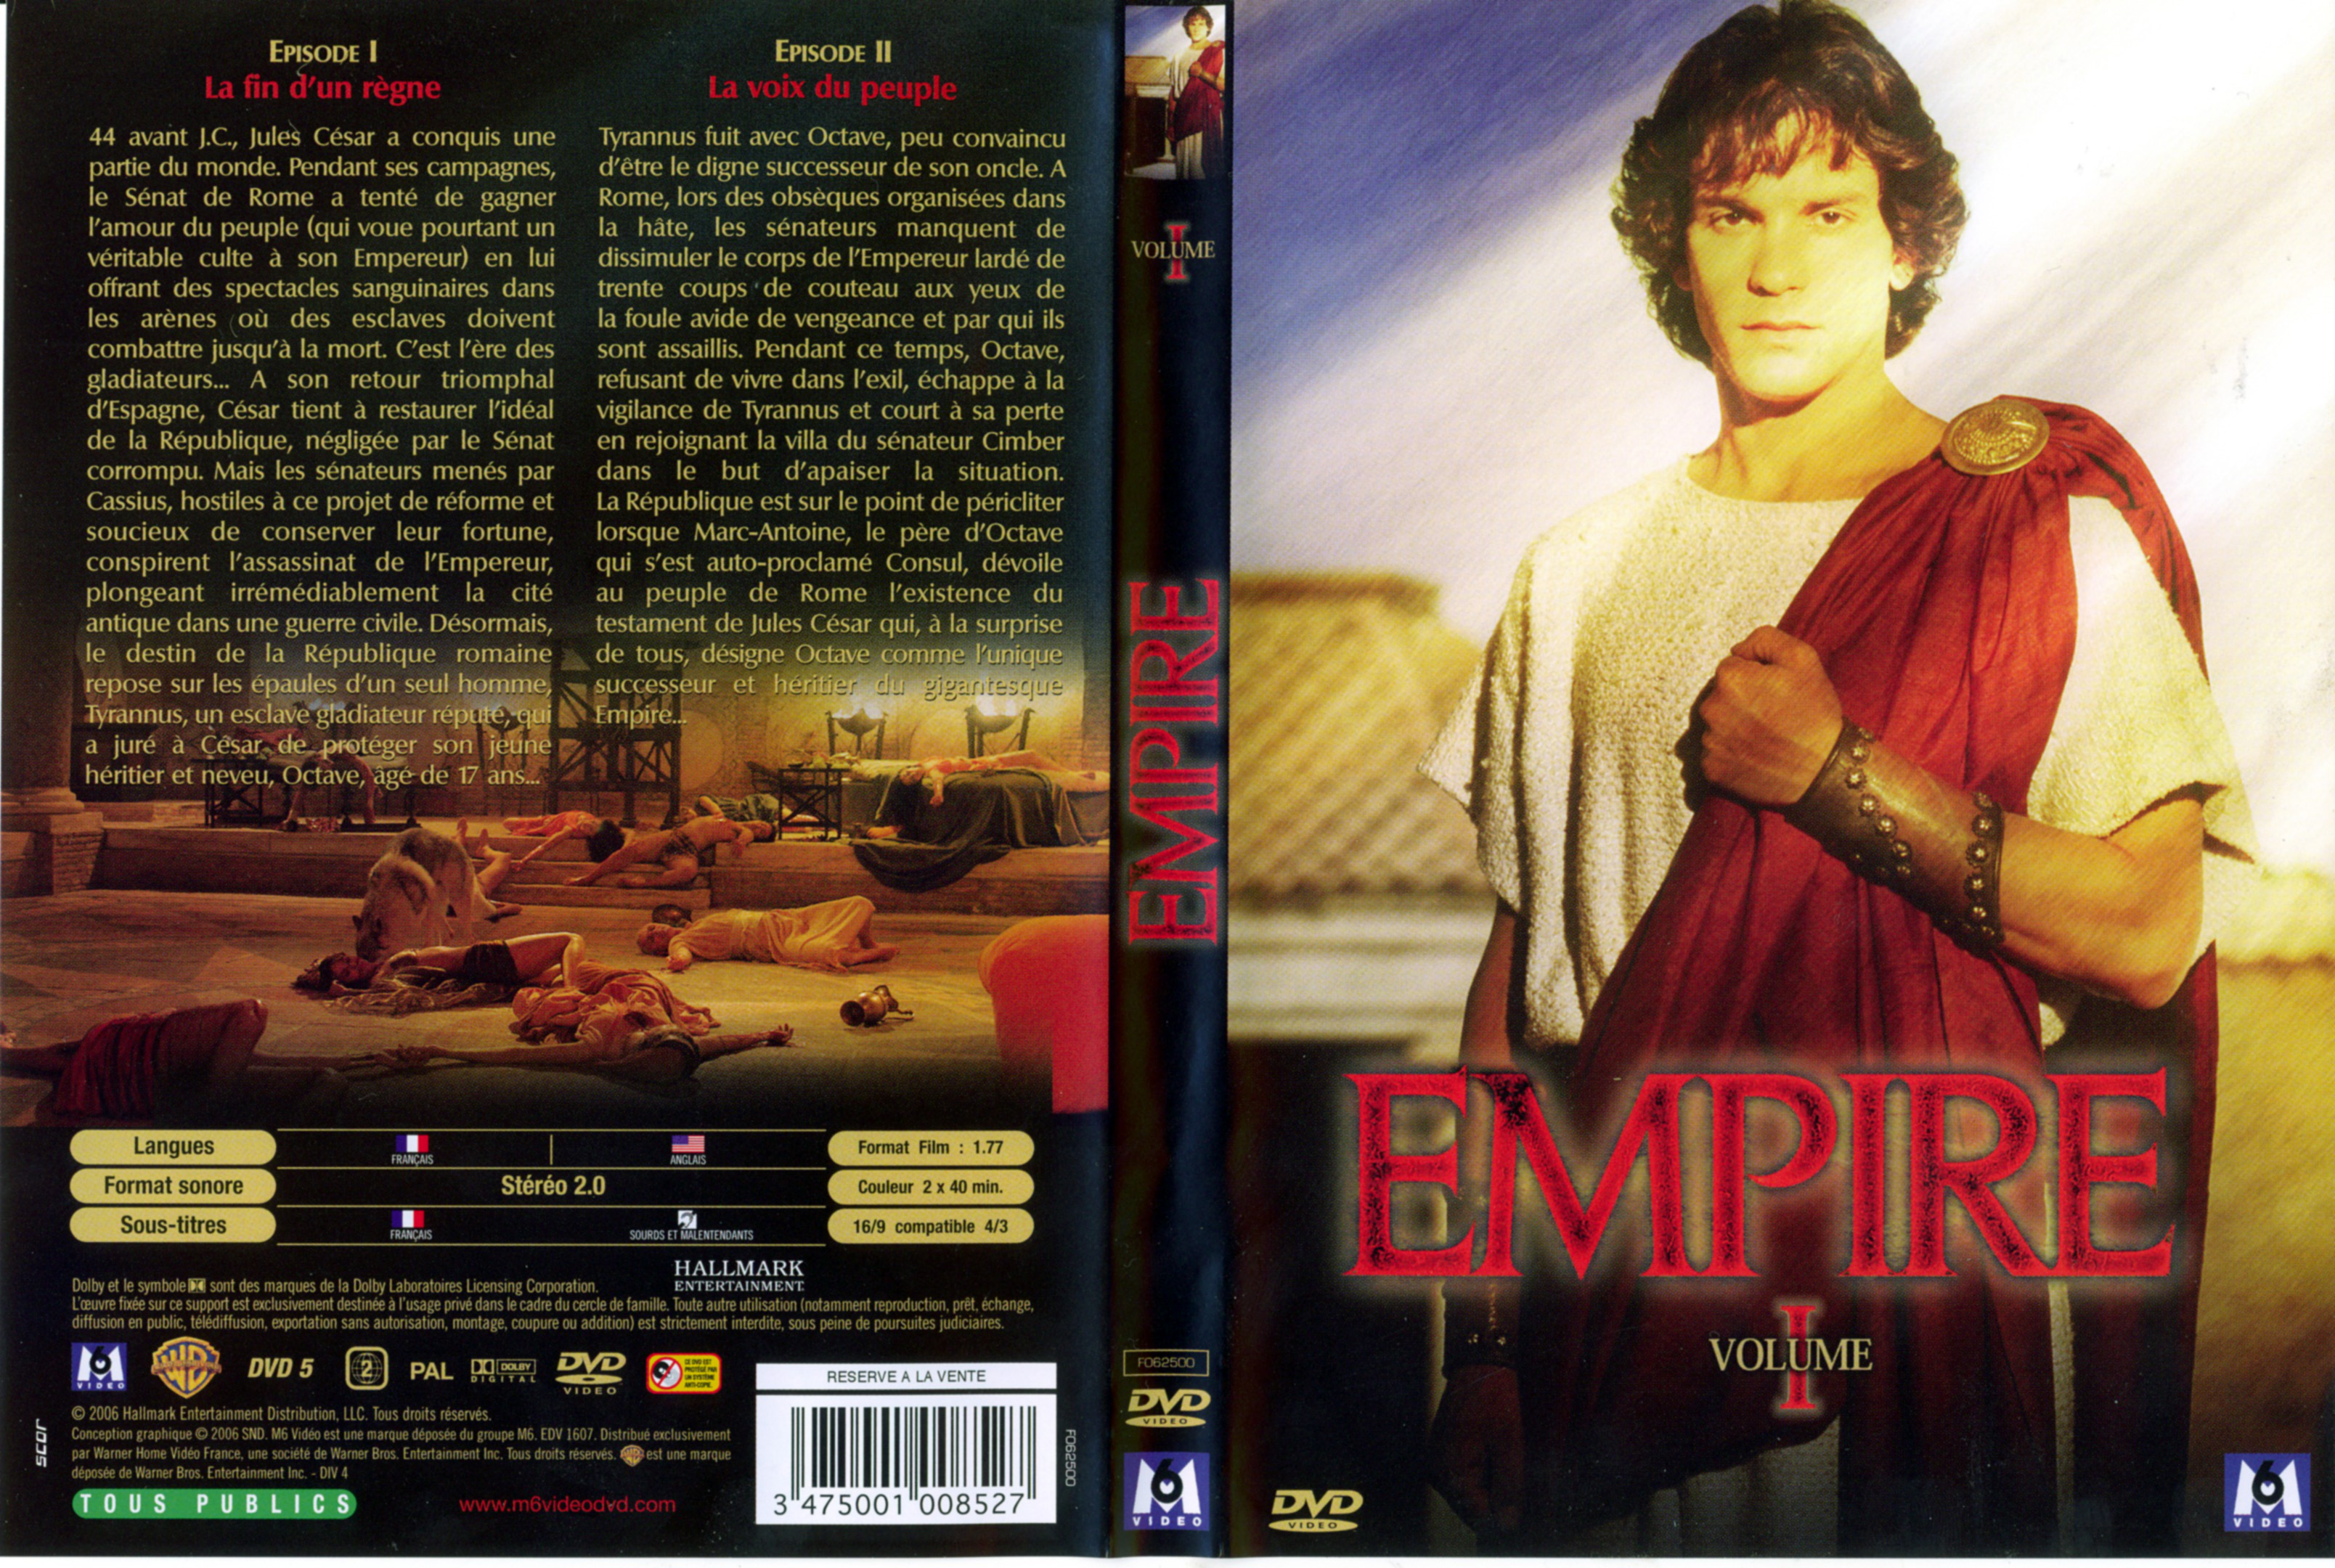 Jaquette DVD Empire vol 1